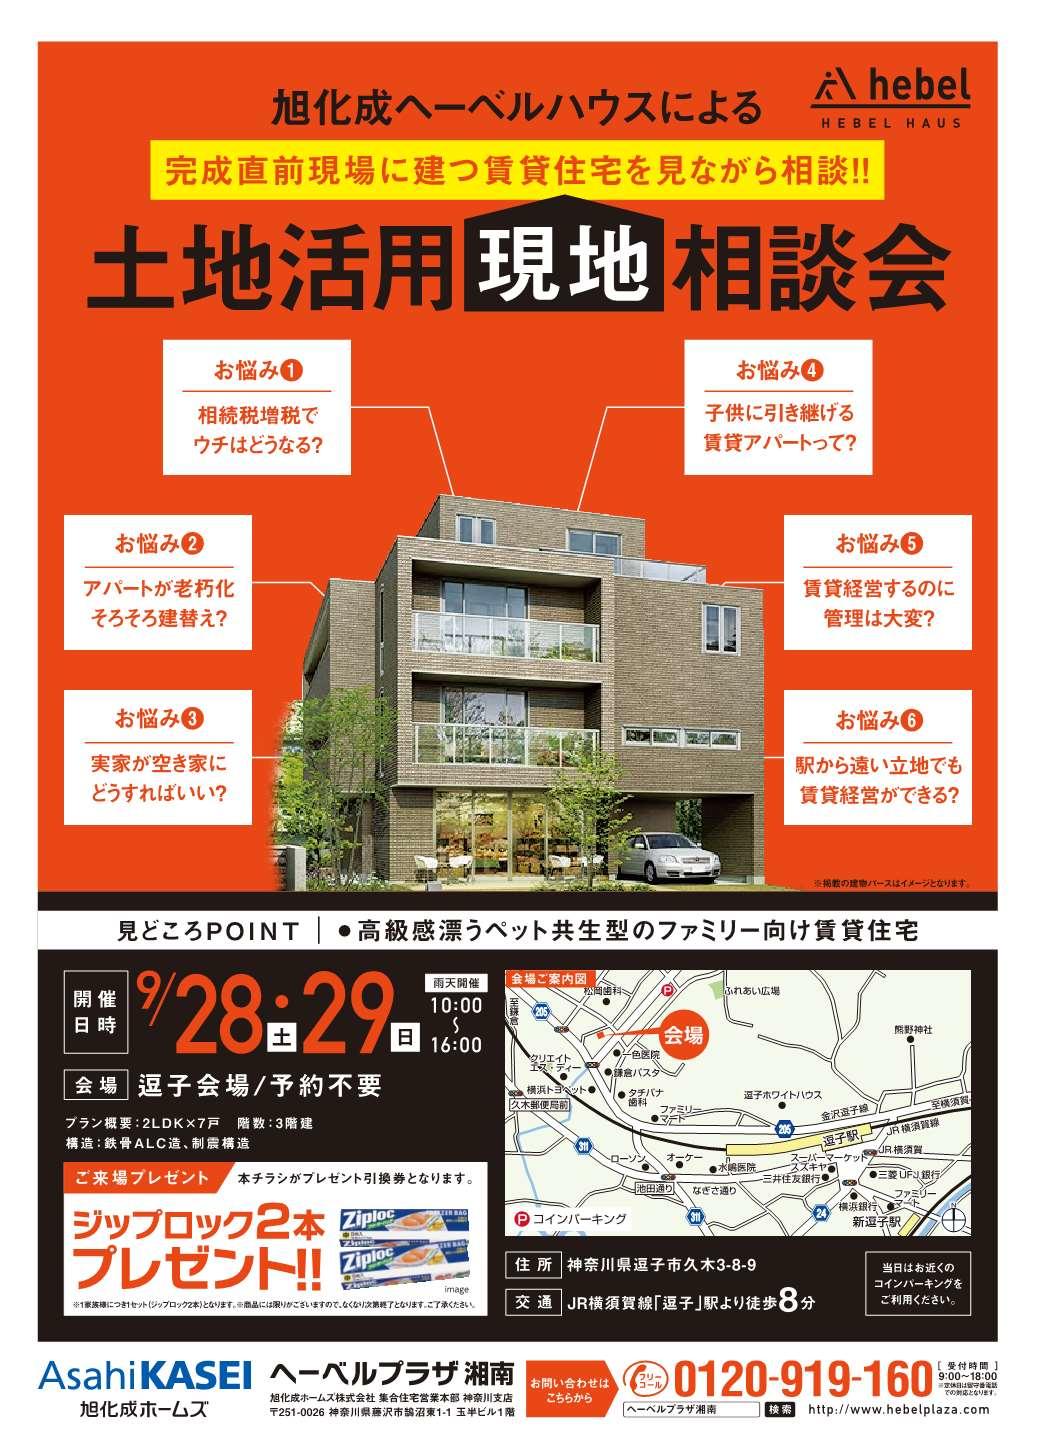 https://www.asahi-kasei.co.jp/maison/hebelplaza/blog/18/syonan/item/2019/190919-05.jpg